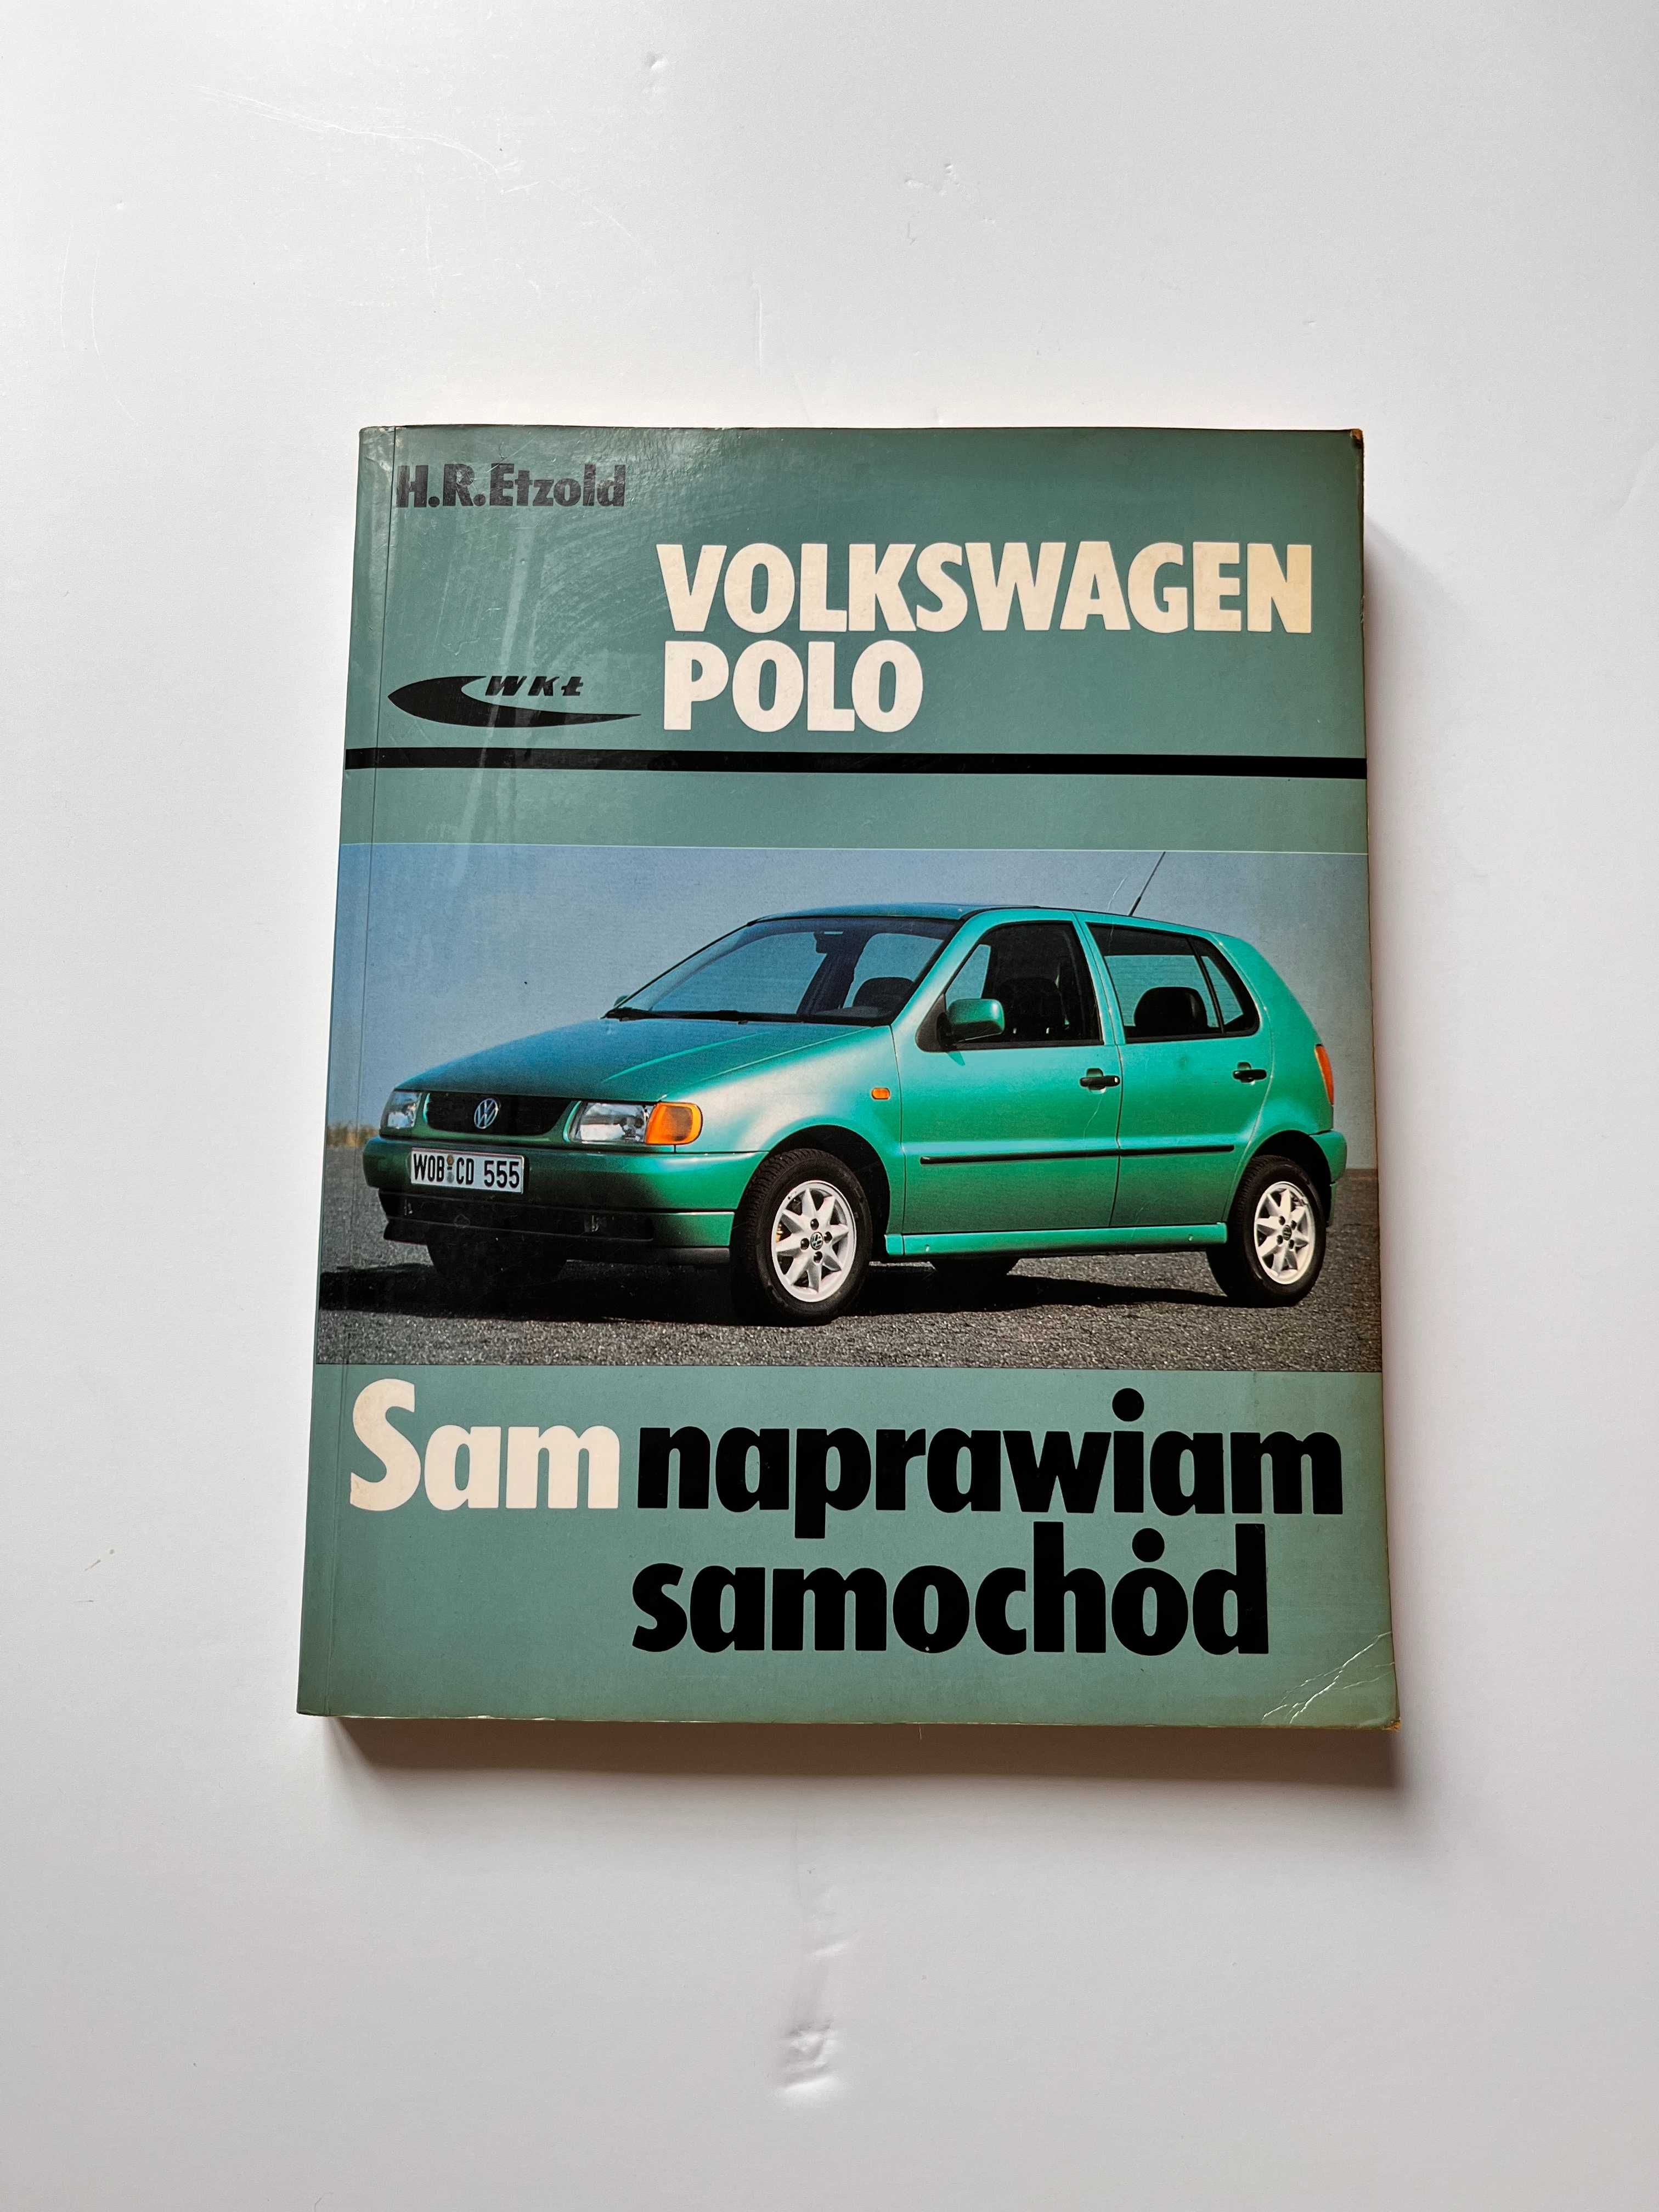 Volkswagen POLO H. R. Etzold "Sam naprawiam samochód"